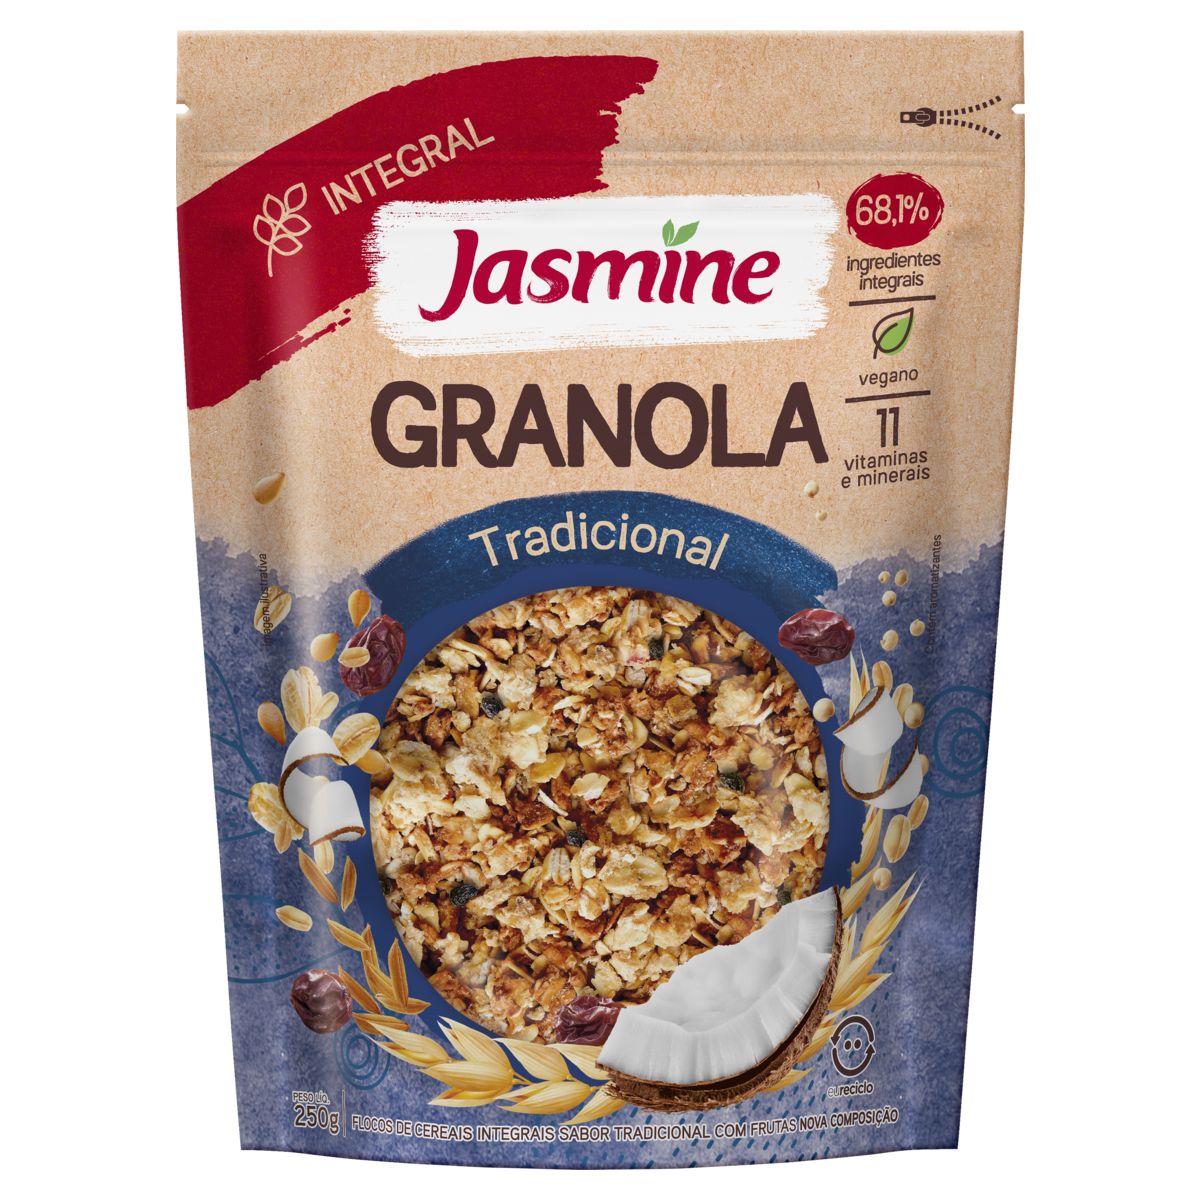 Granola Jasmine Tradicional 68,1% Integral Pouch 250g image number 0